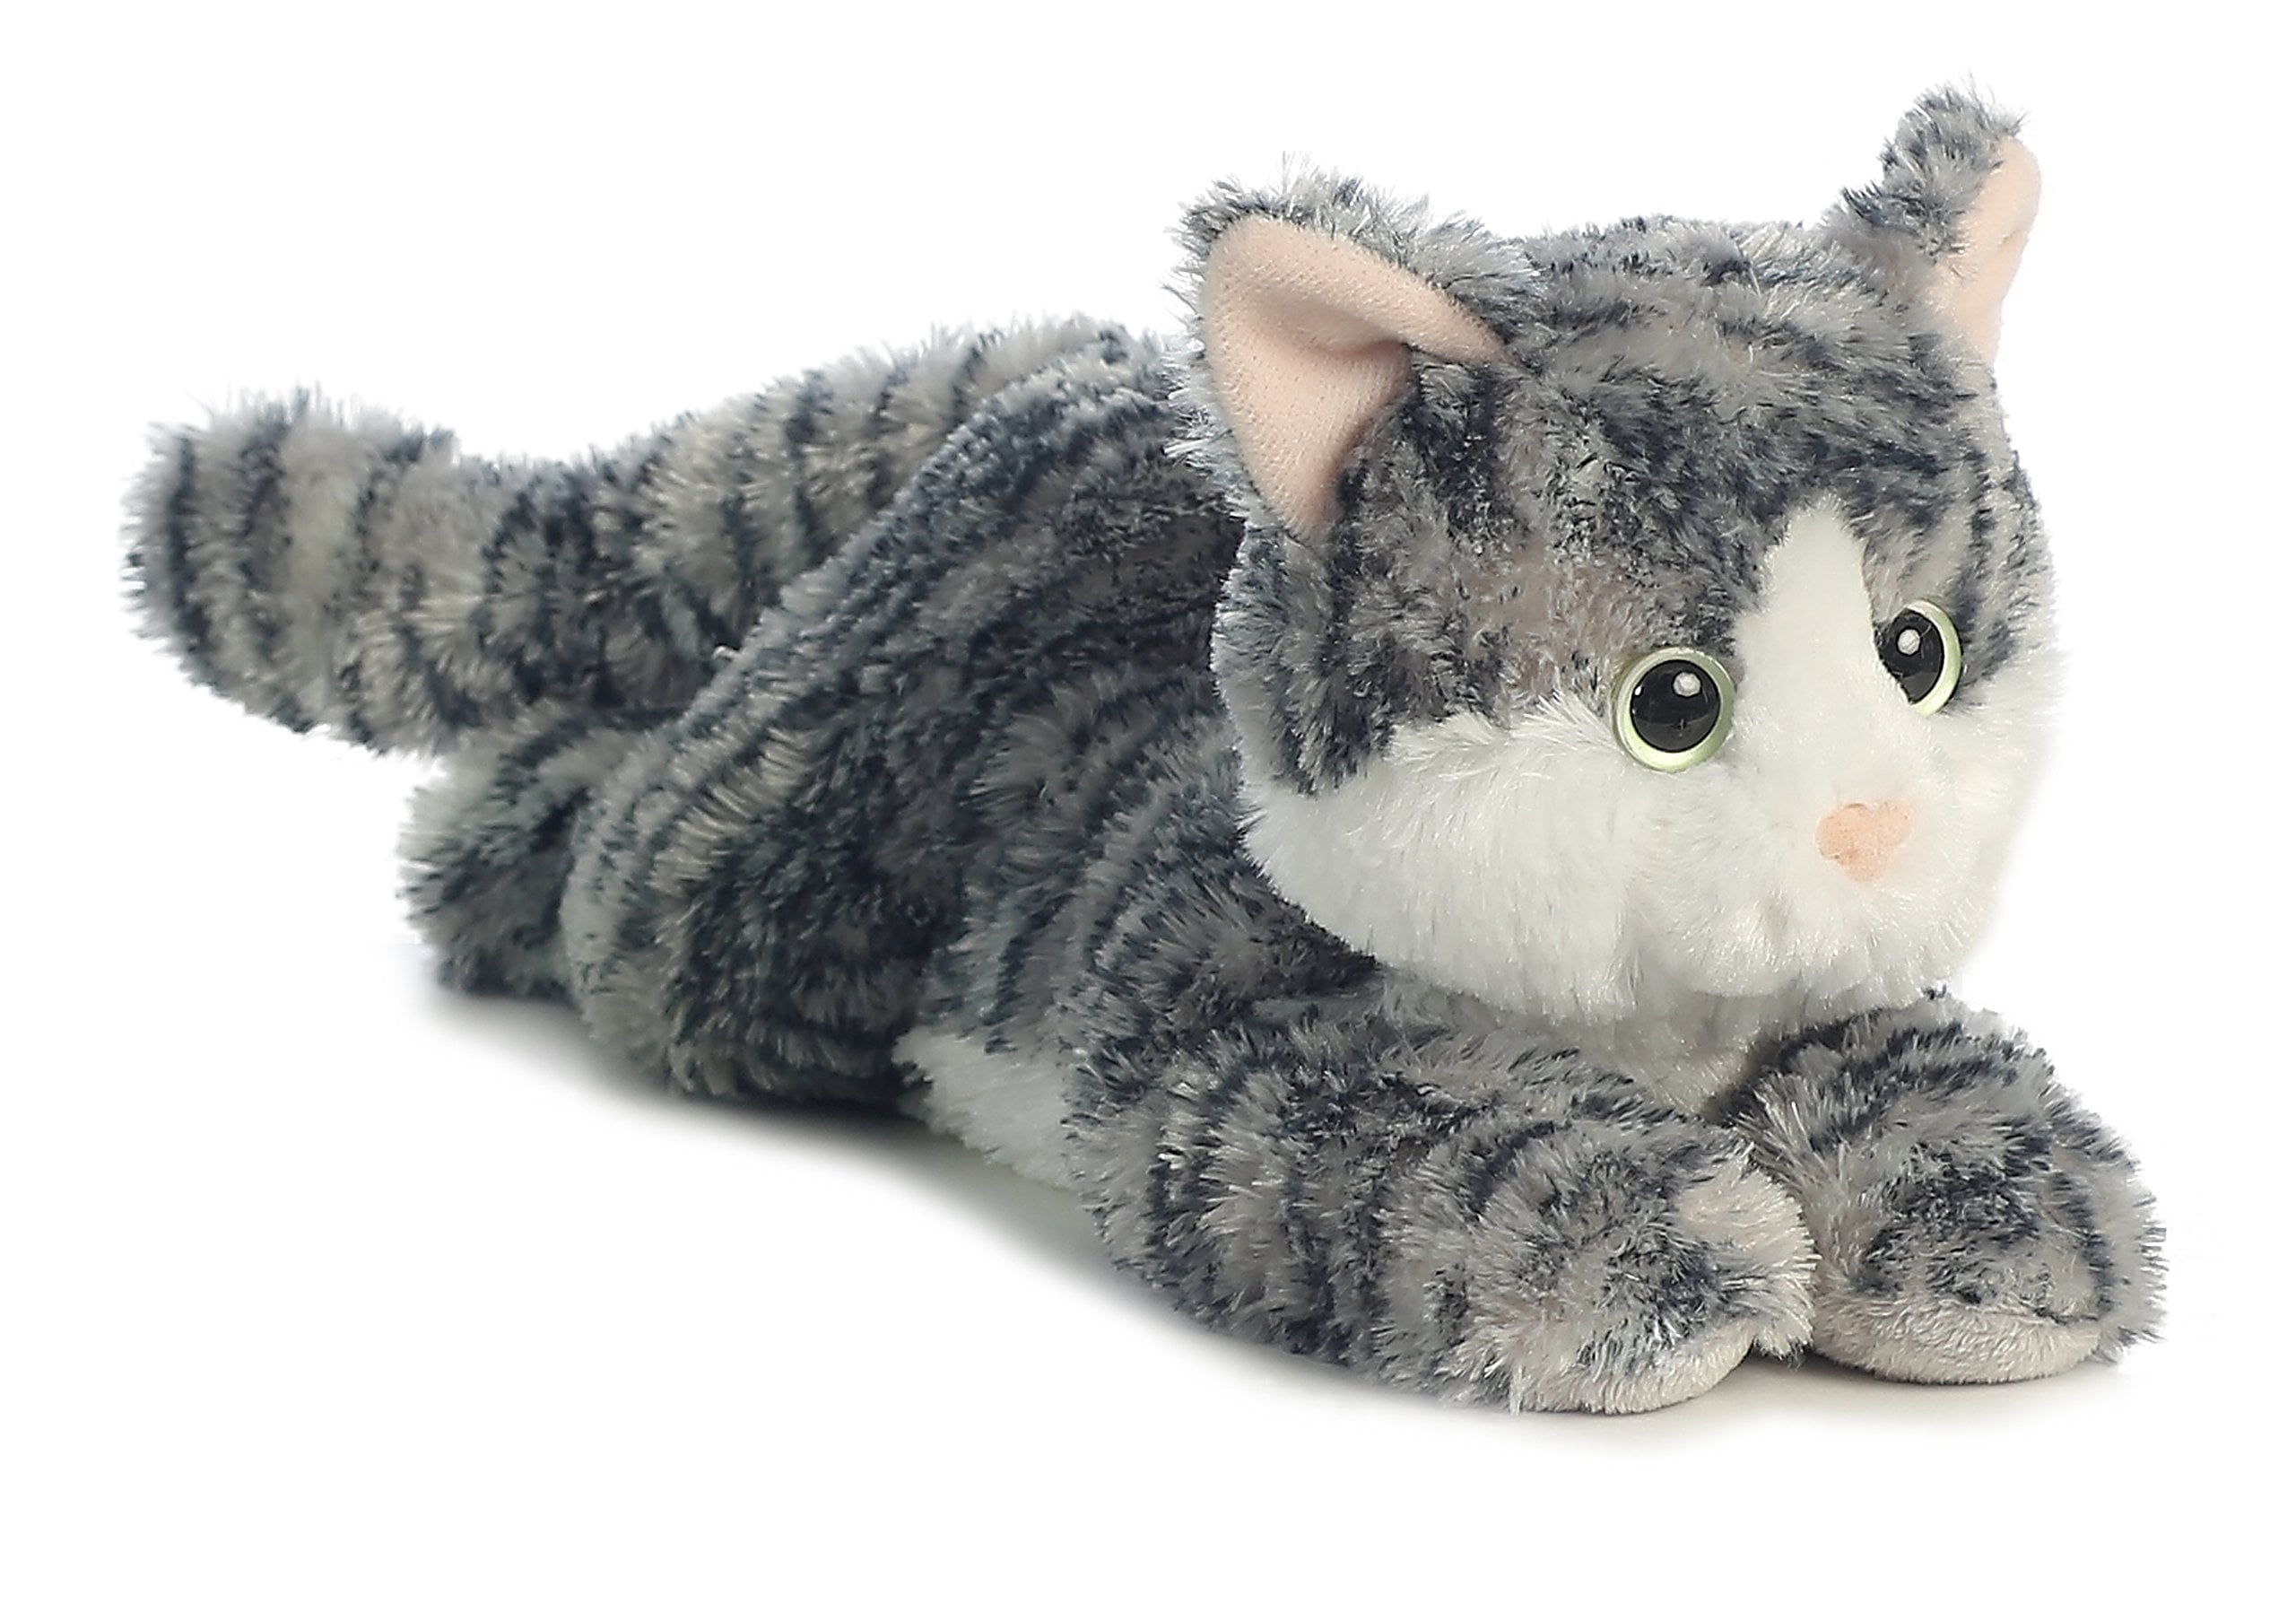 SCATTER Douglas plush 6" long GRAY stuffed animal CAT brown grey white kitty 